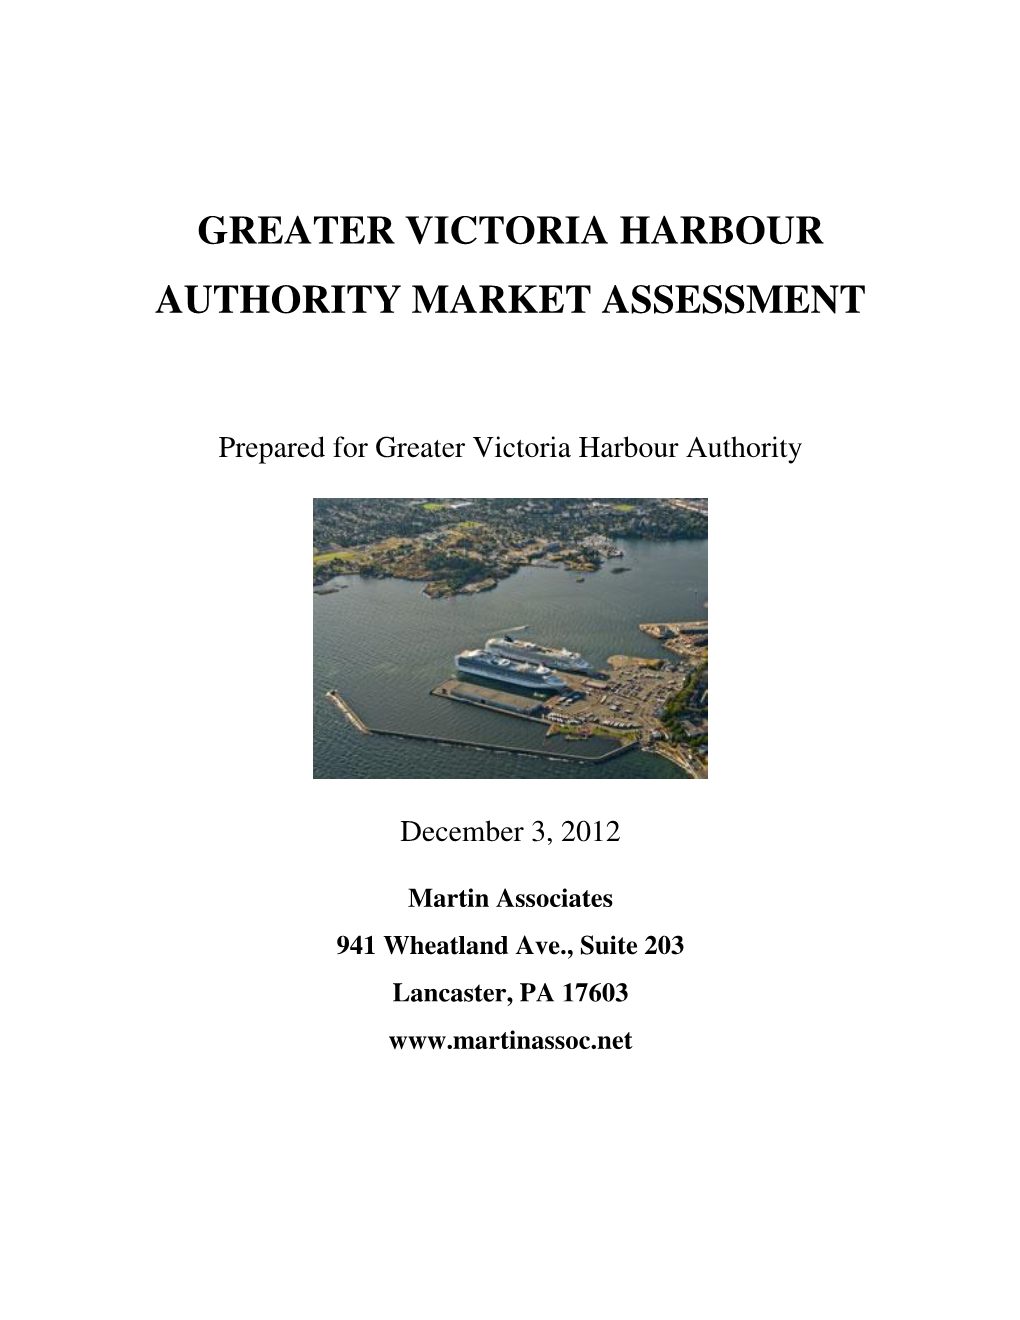 Ogden Point Marine Market Assessment